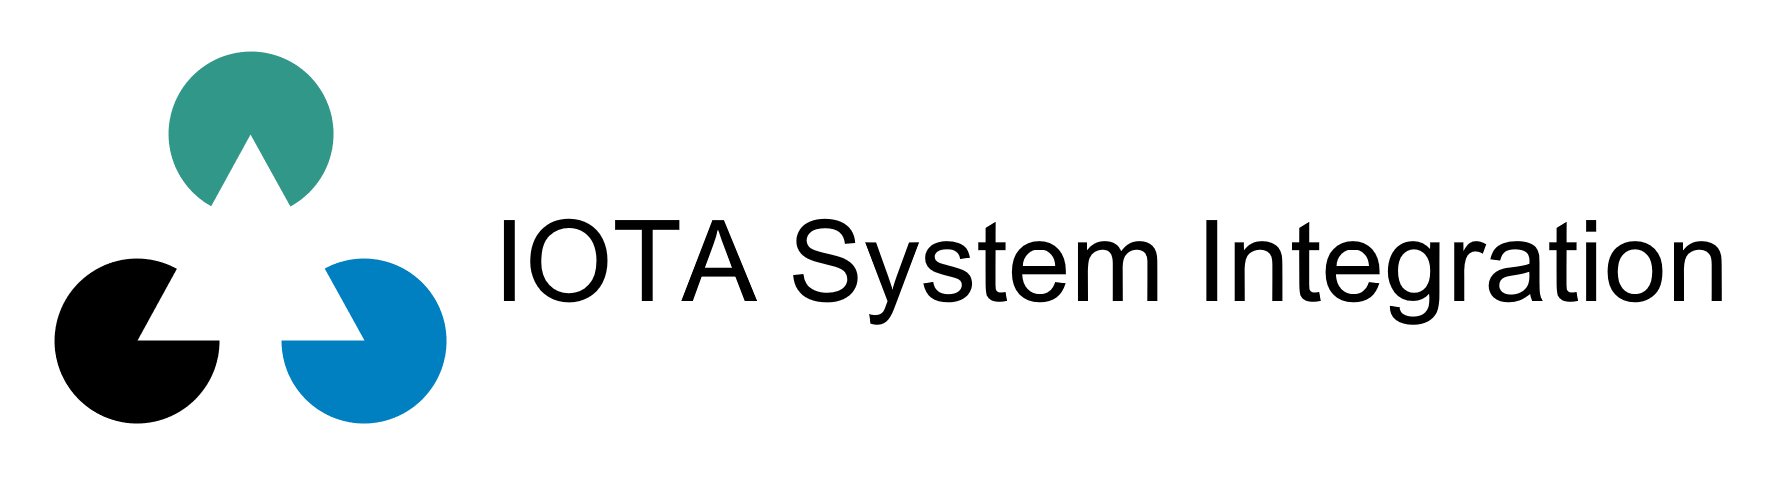 IOTA System Integration